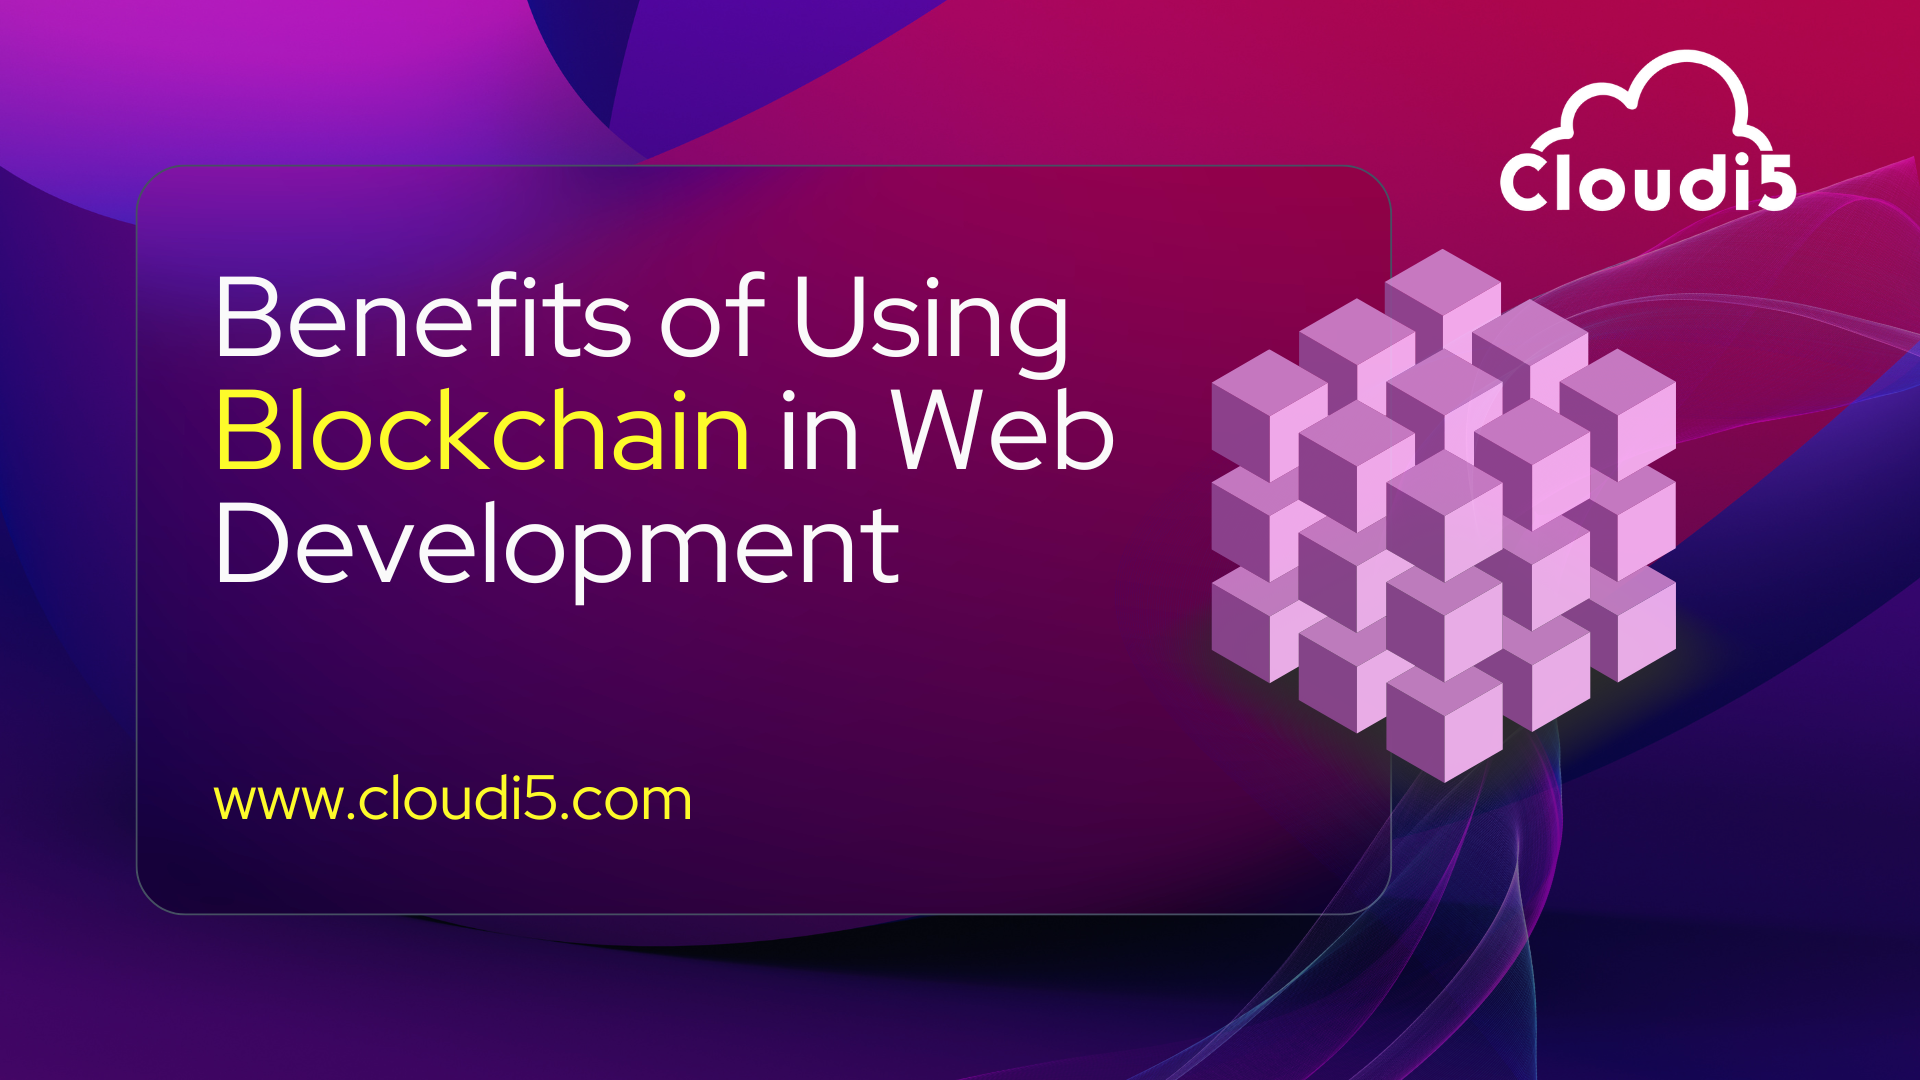 The Benefits of Using Blockchain in Web Development